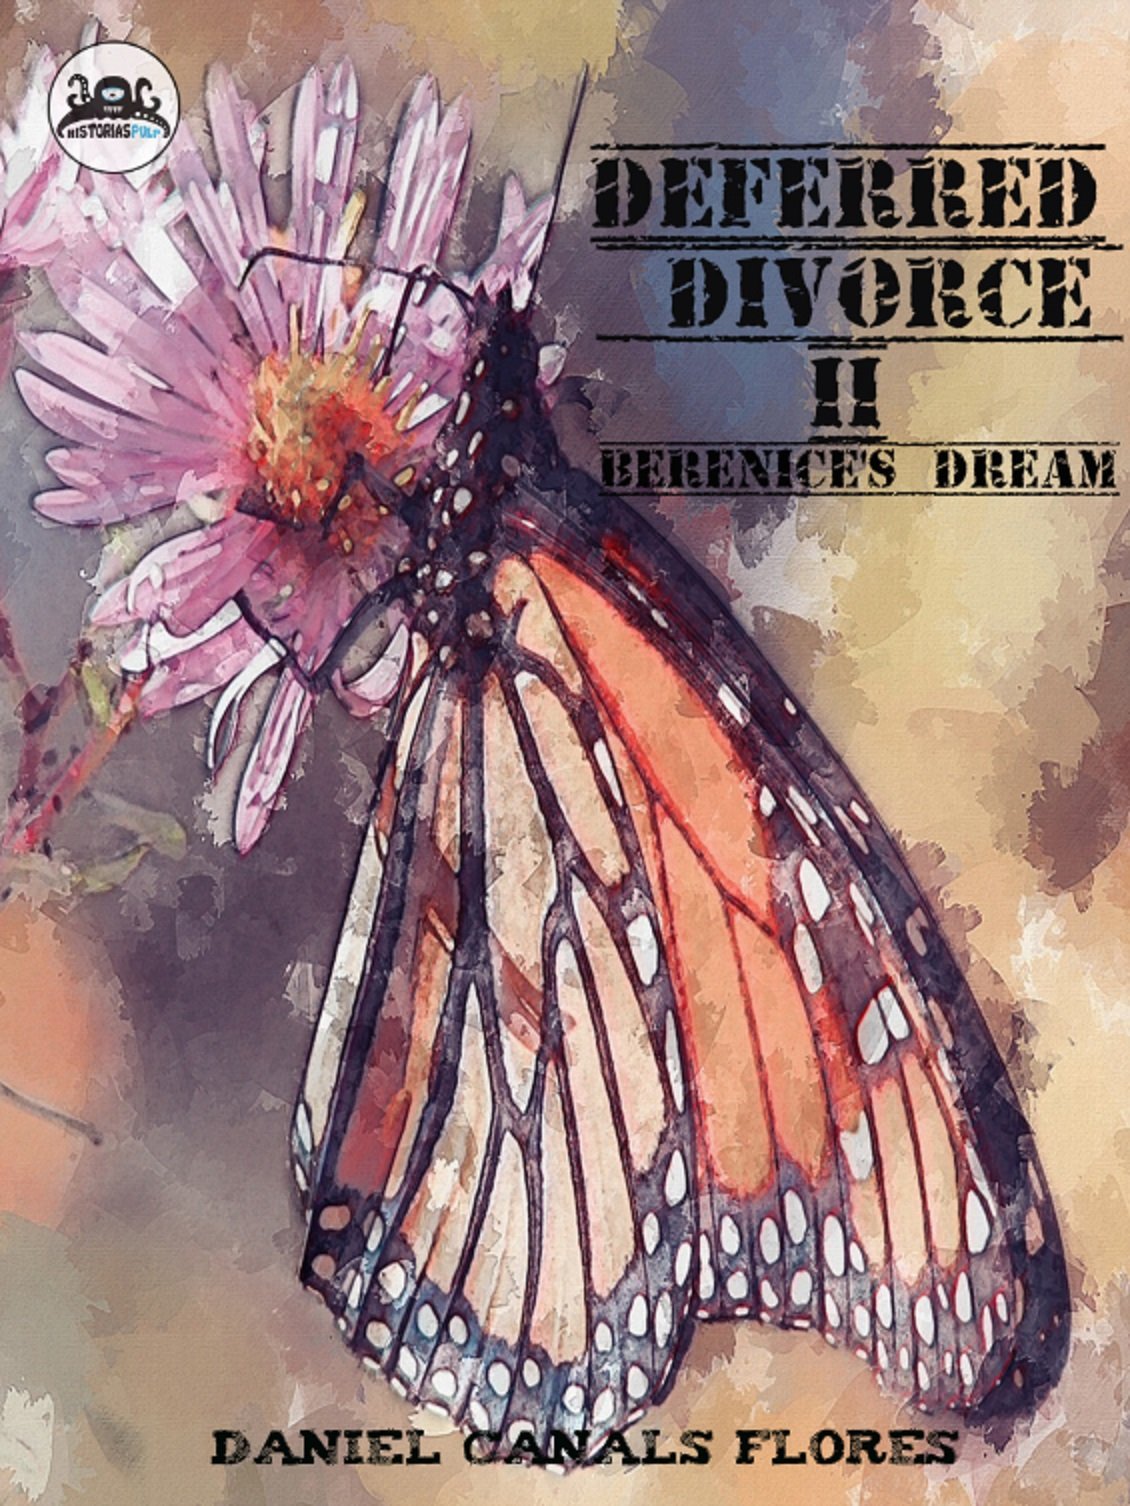 DEFERRED DIVORCE II BERENICE'S DREAM, by Daniel Canals